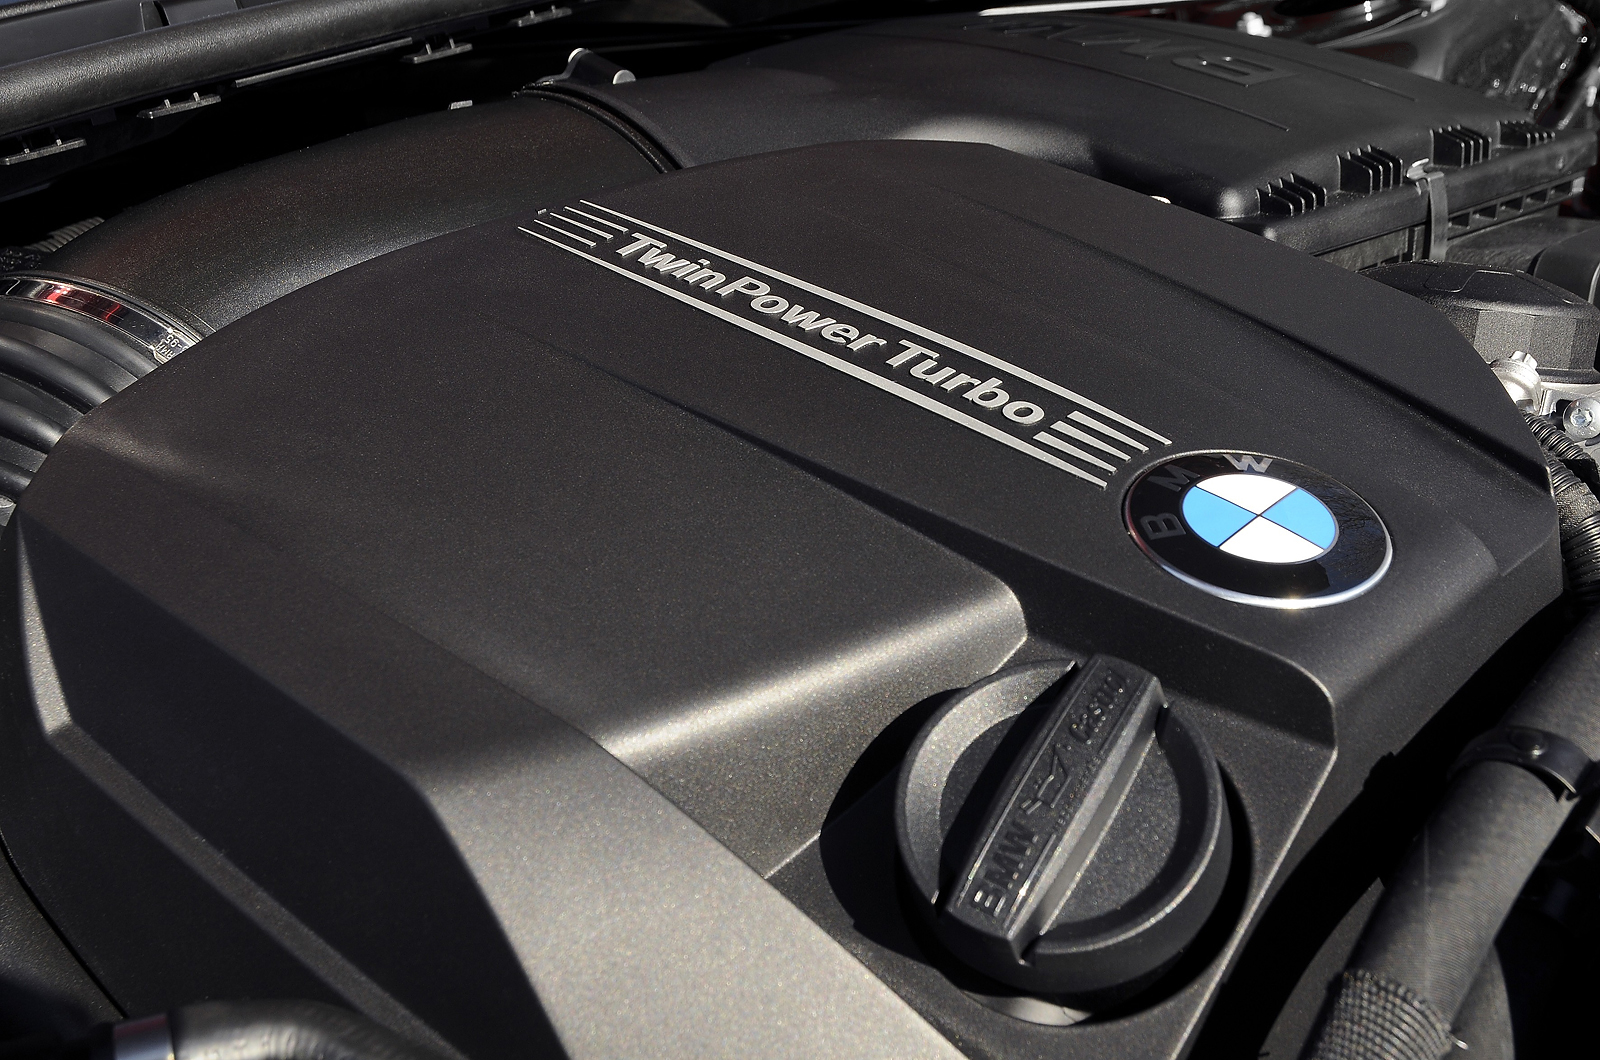 BMW 3 Series Coupé engine bay